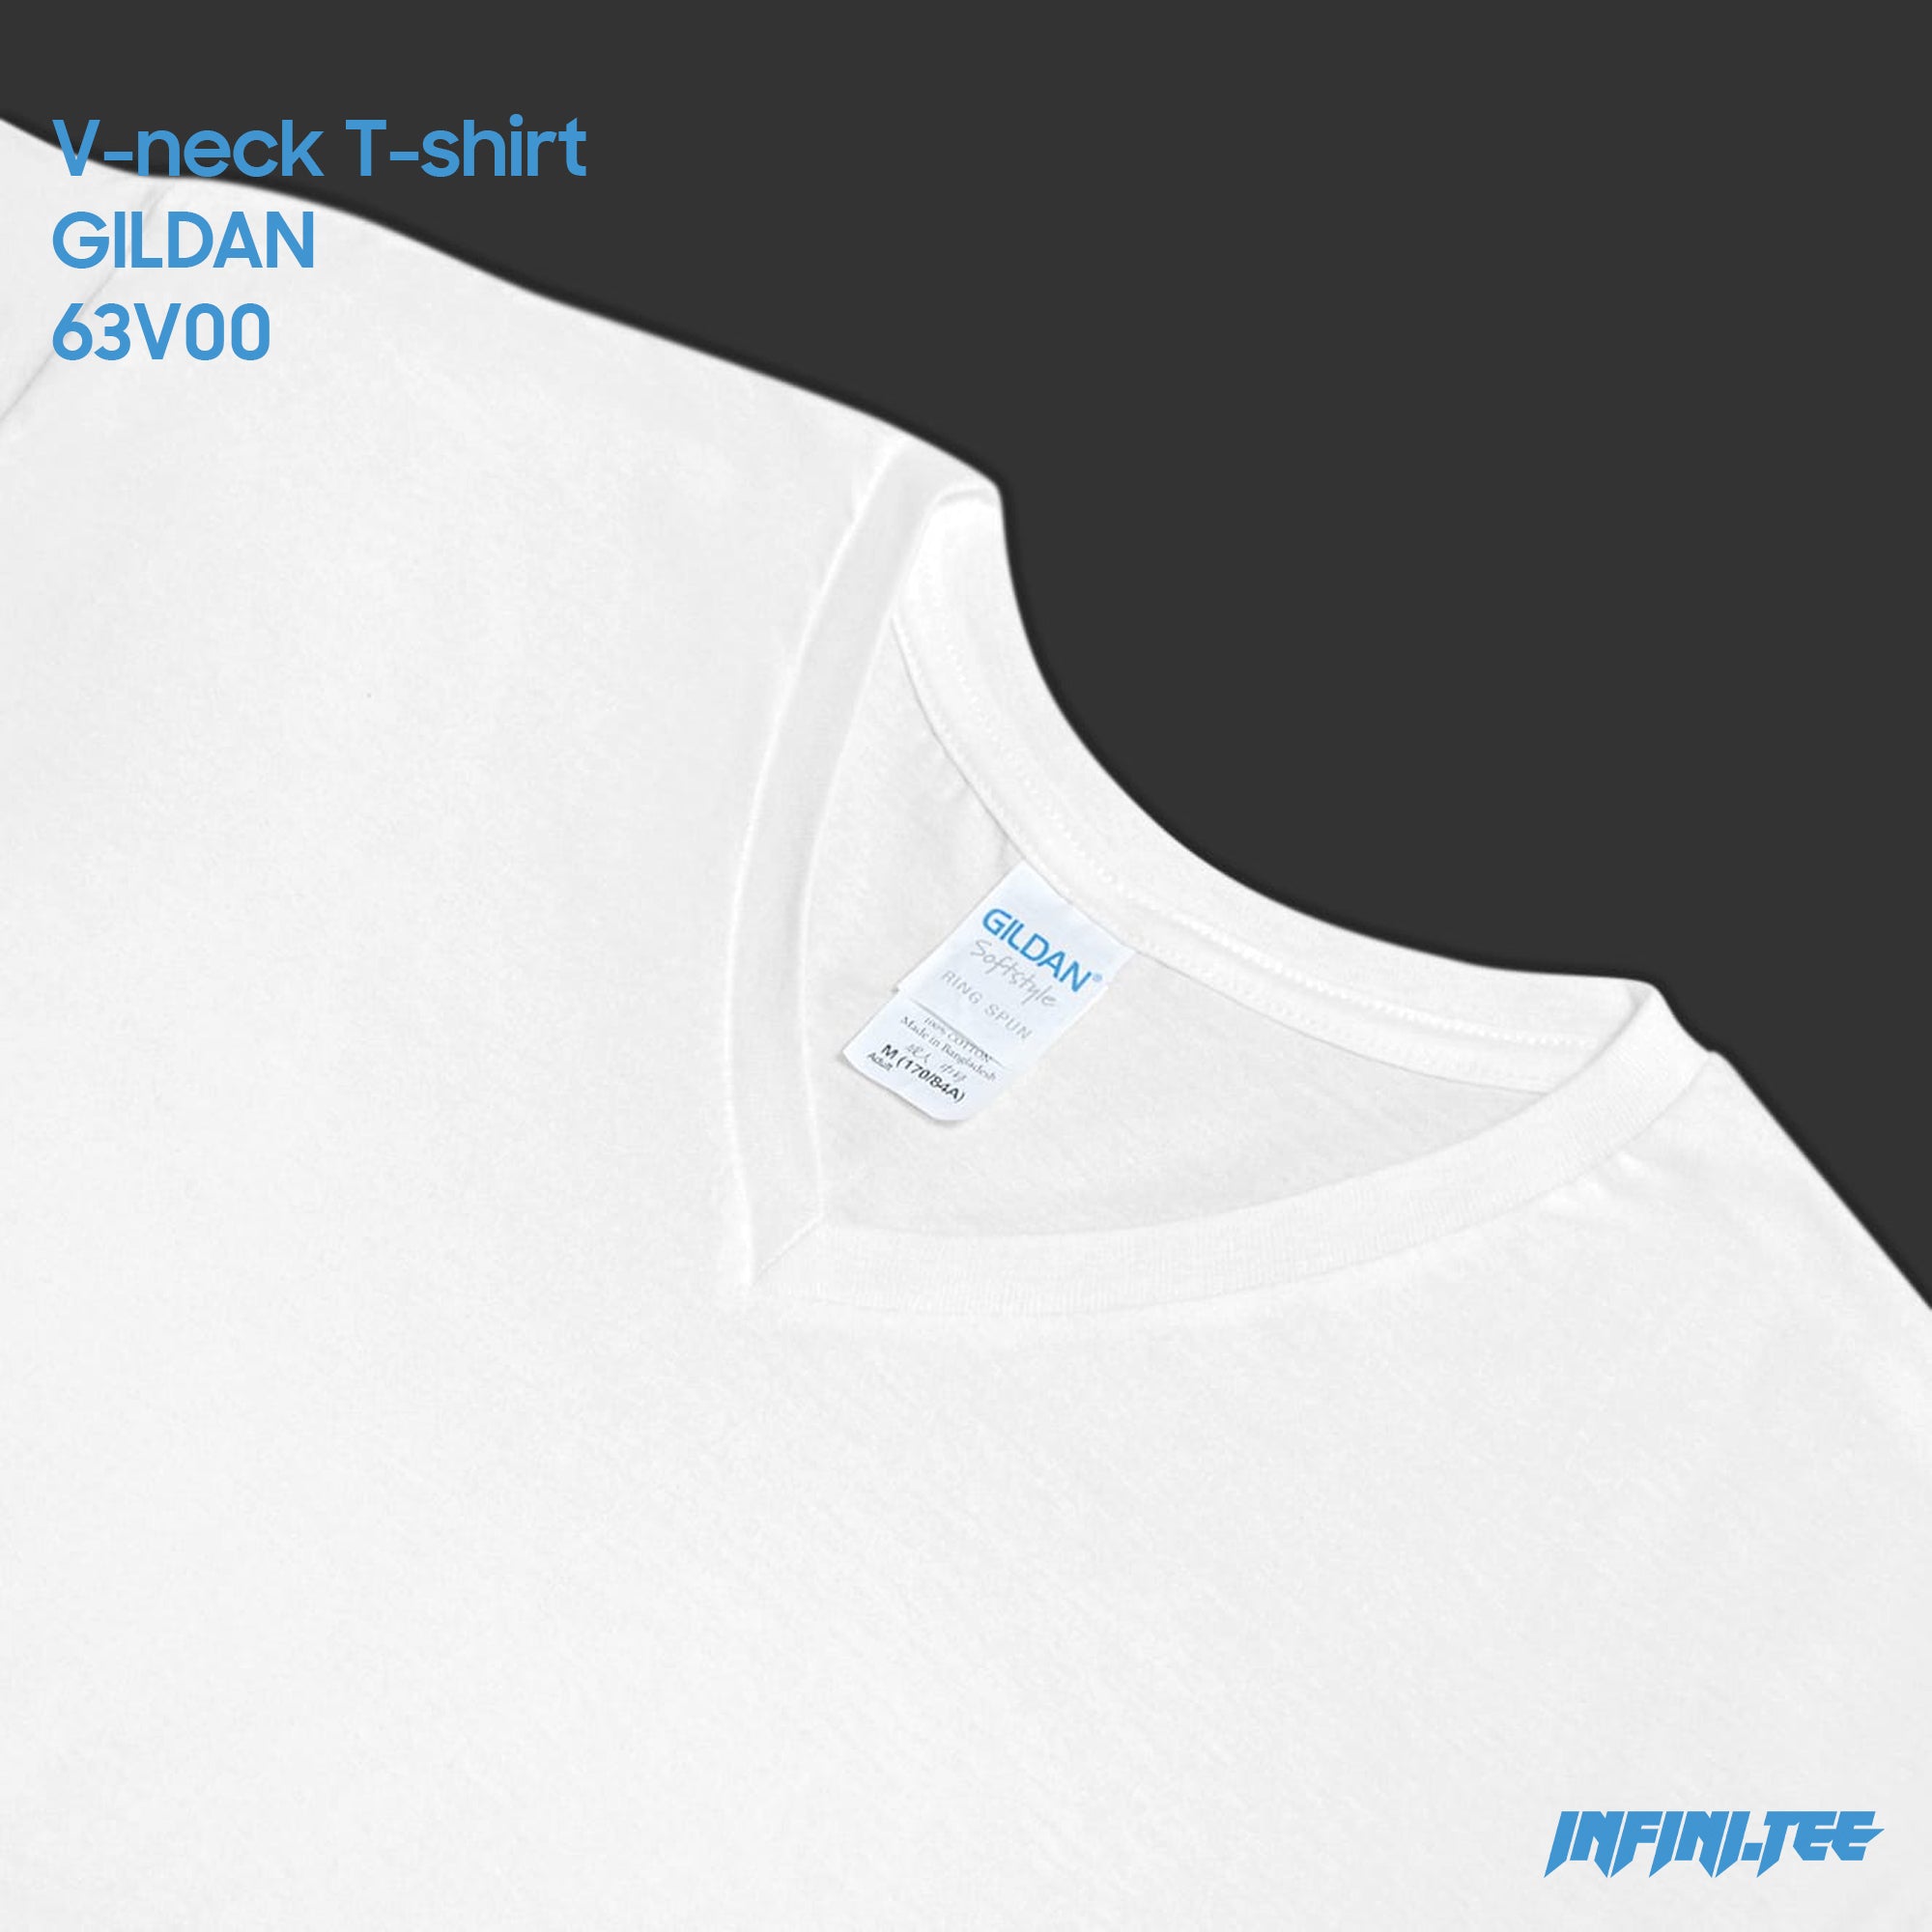 V-NECK T-shirt 63V00 GILDAN - WHITE